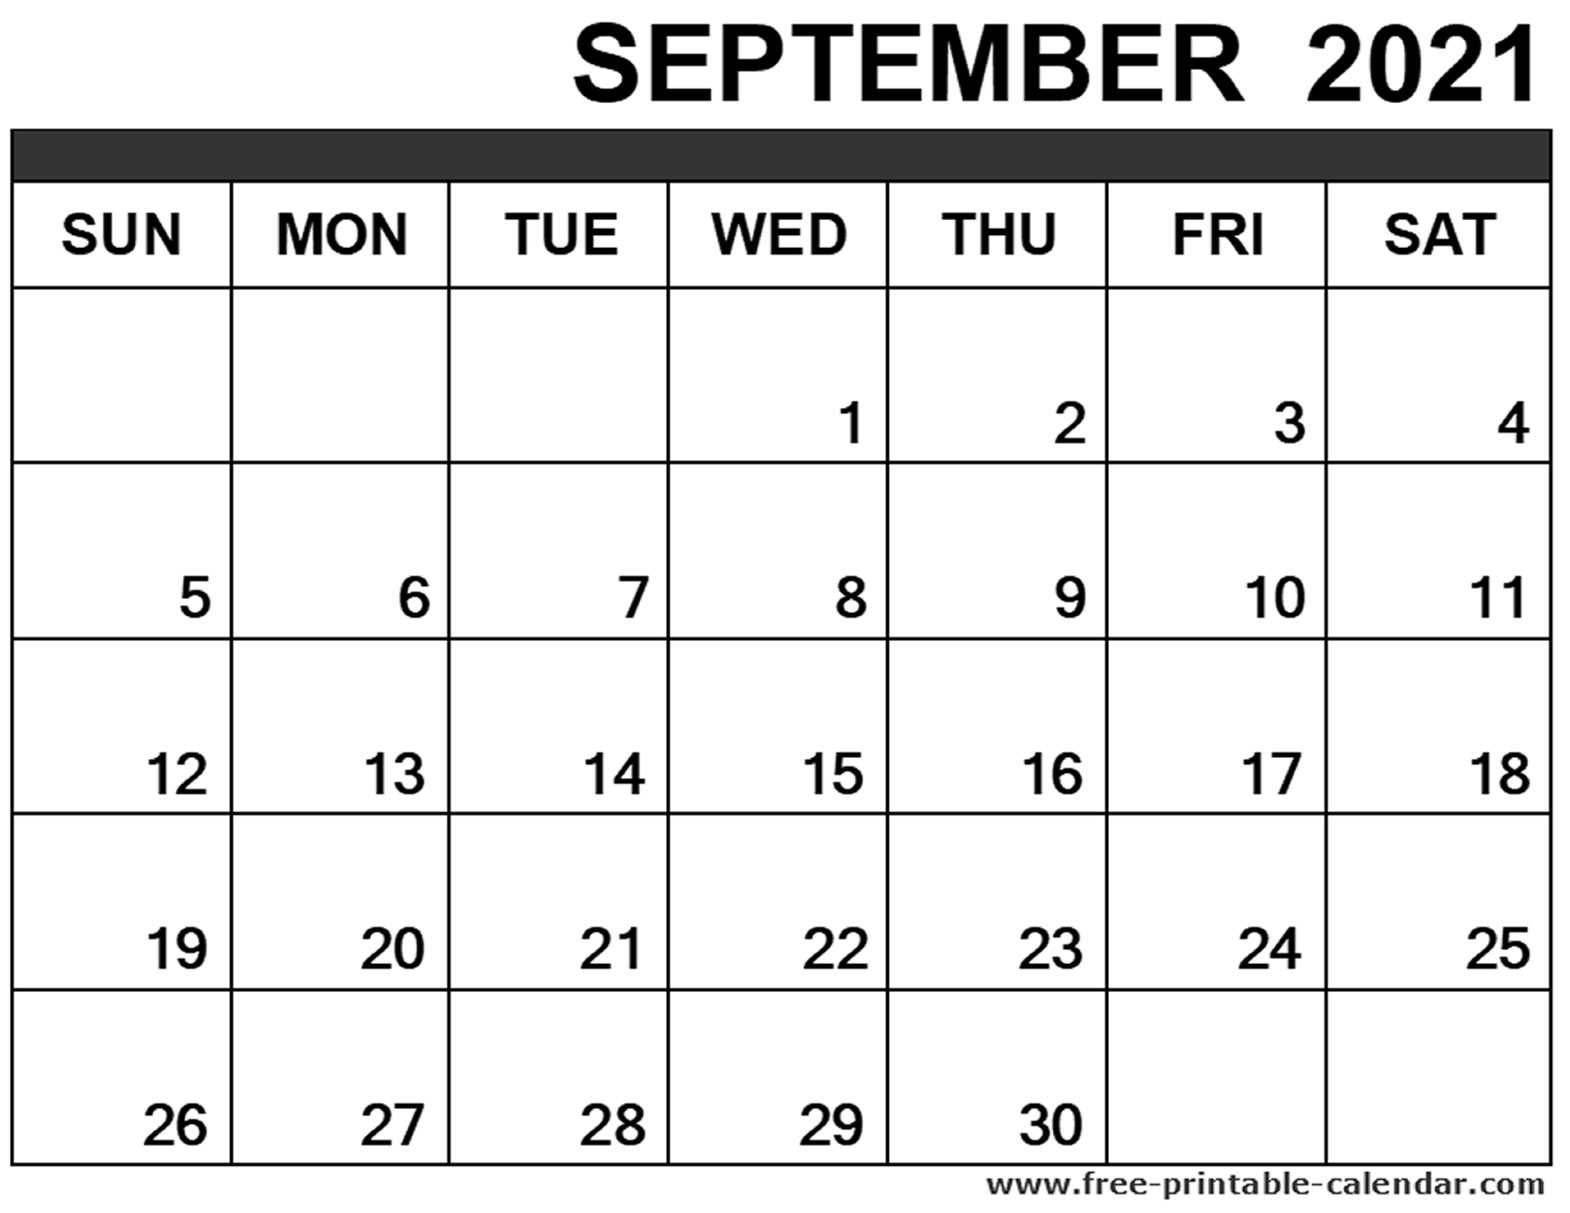 September 2021 Calendar Printable - Free-Printable-September 2021 Calendar Printable Template